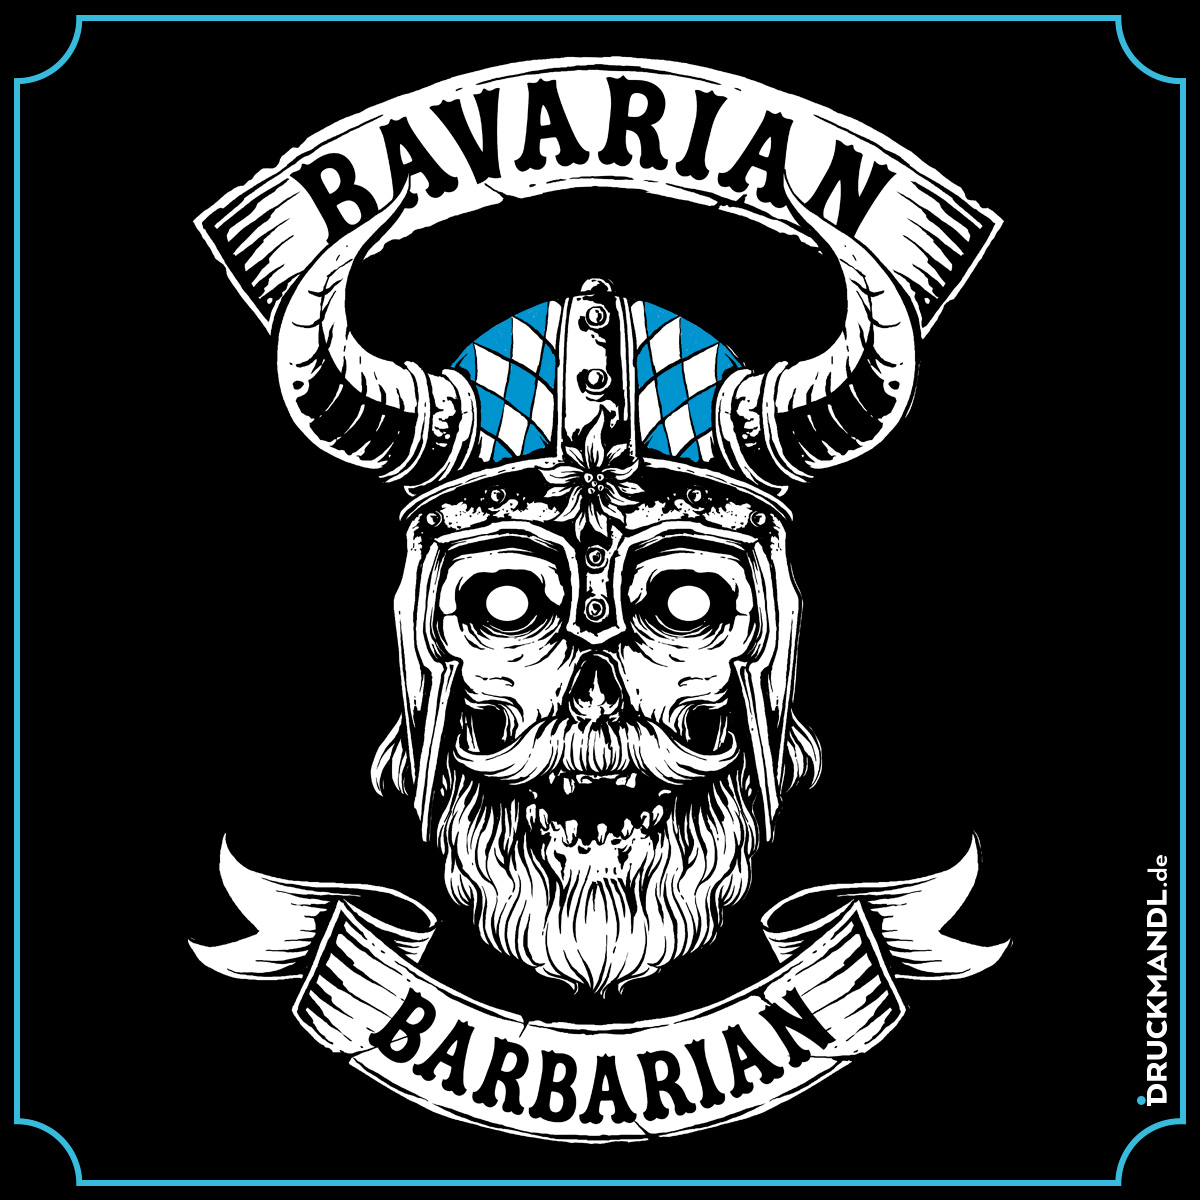 Bavarian Barbarian